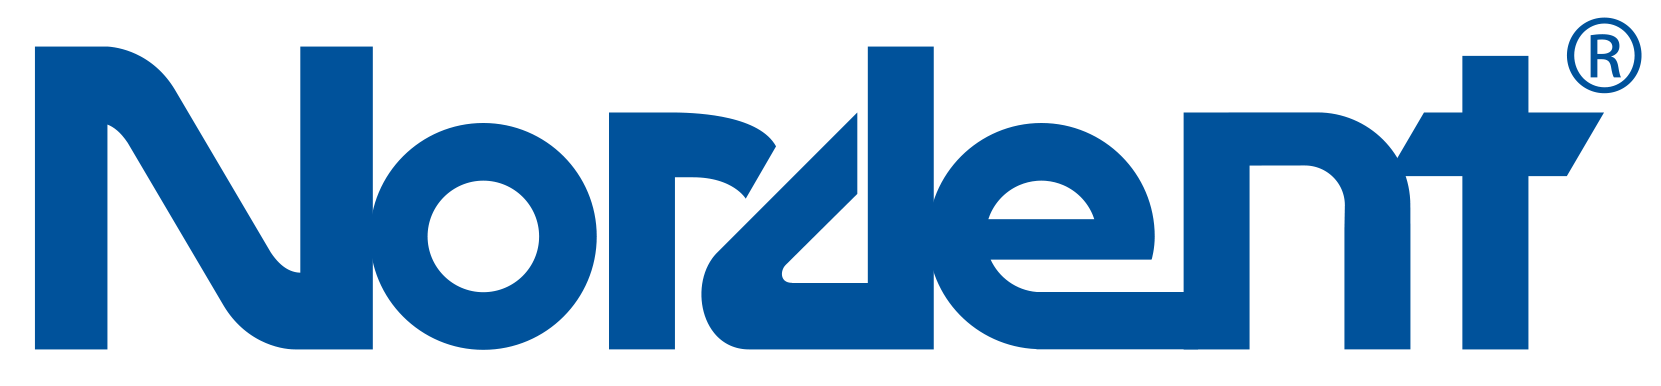 nordent_logo